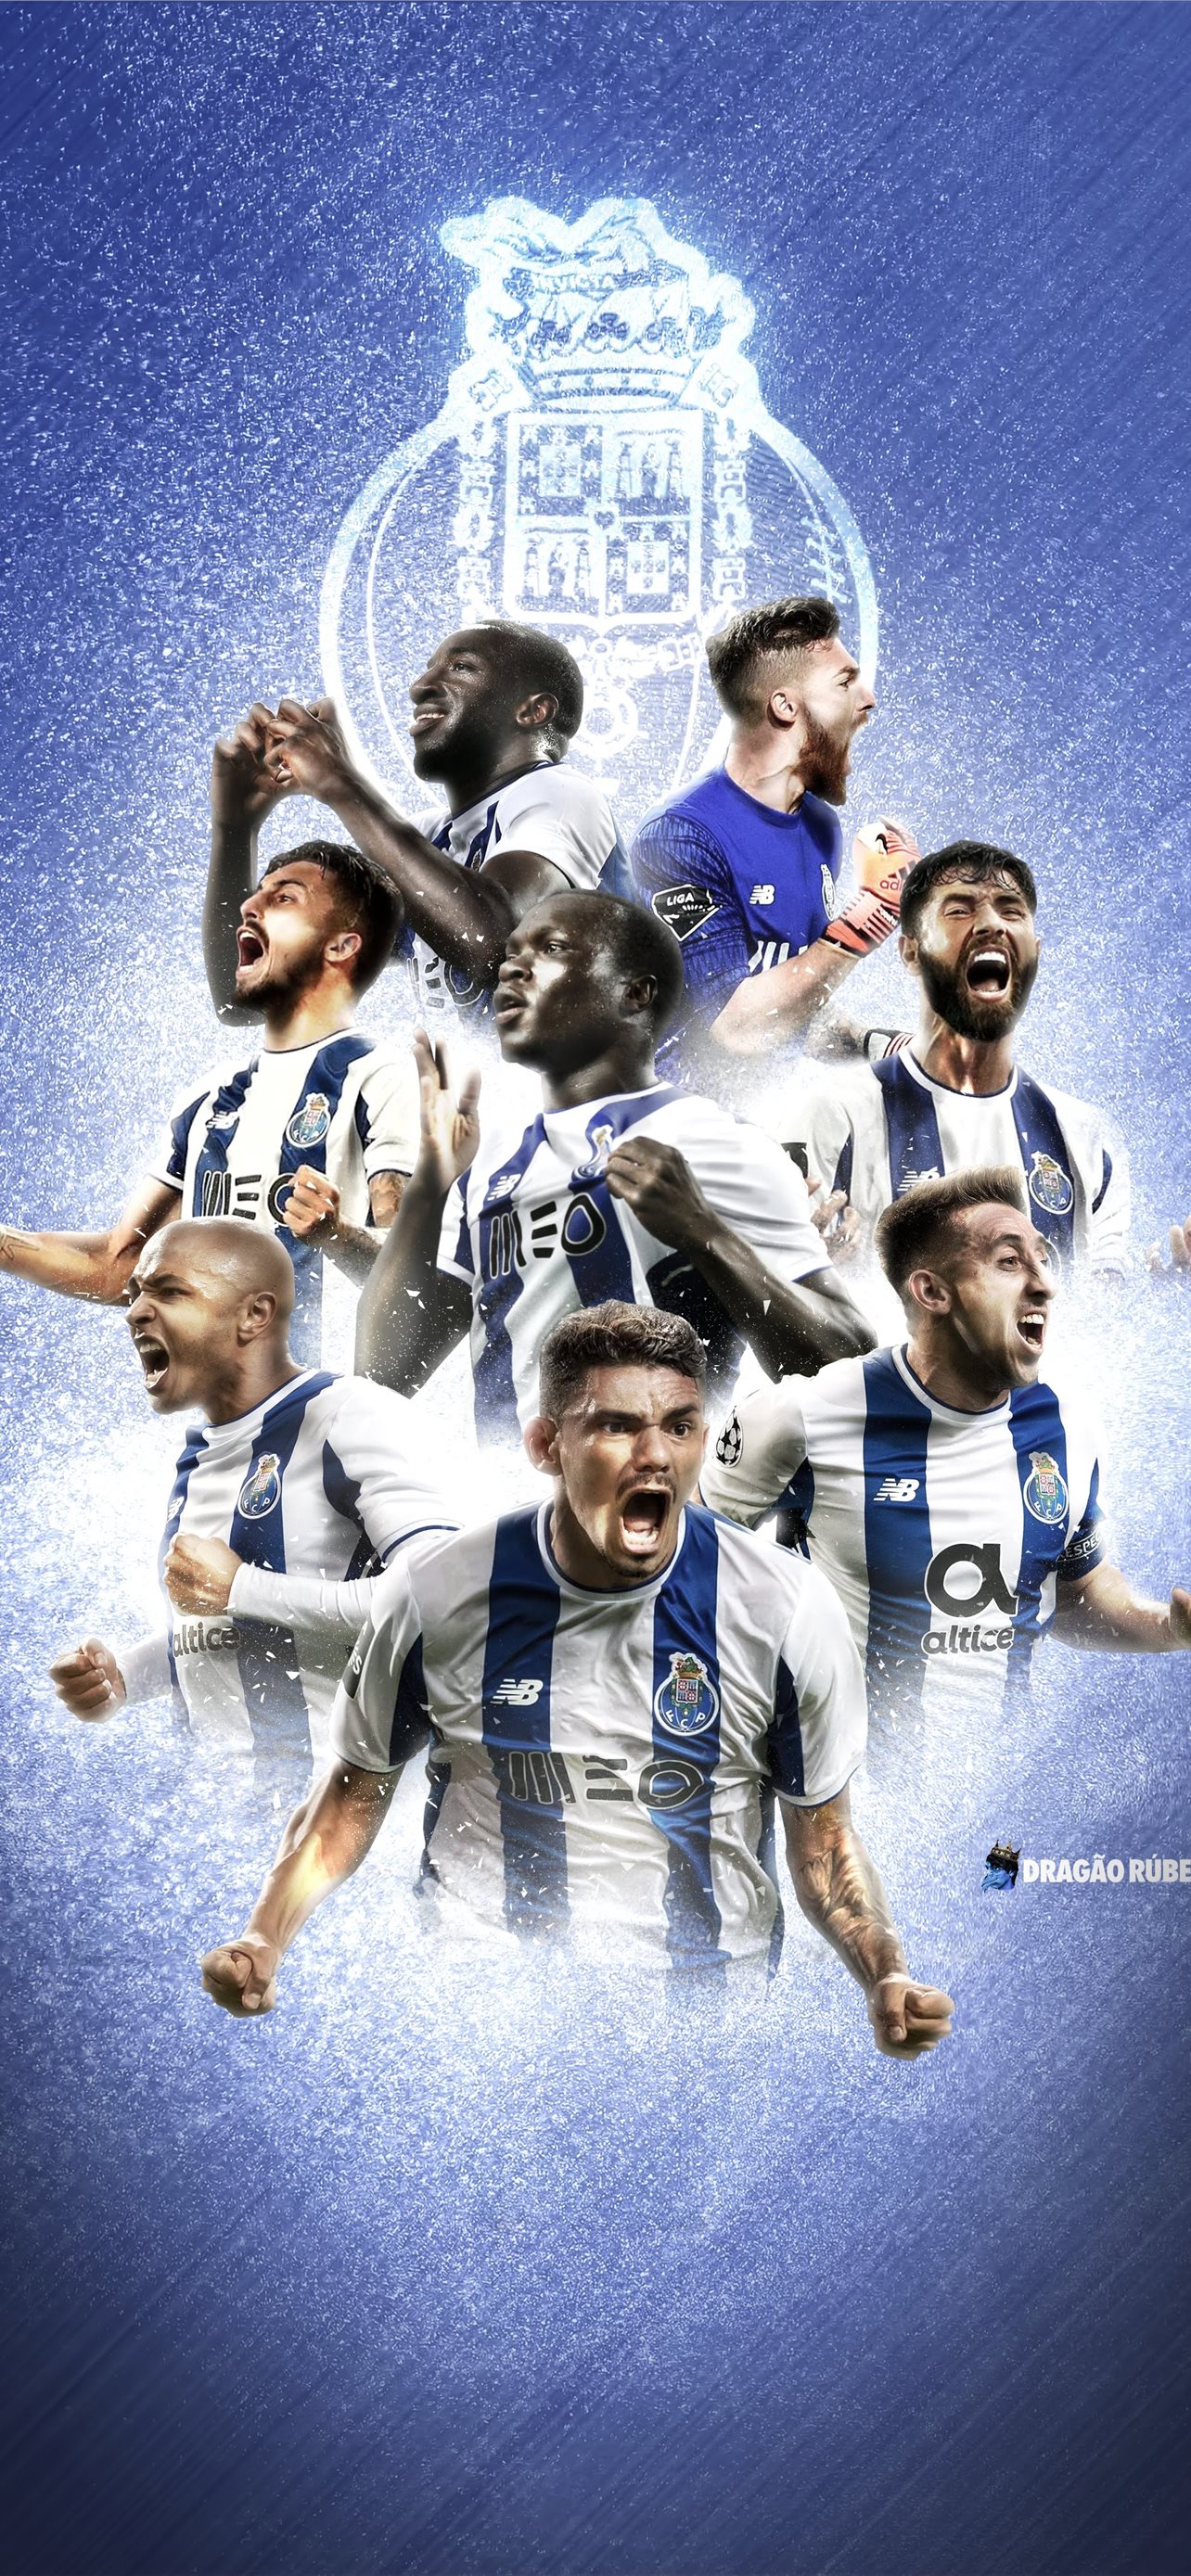 FC Porto - Soccer & Sports Background Wallpapers on Desktop Nexus (Image  2467795)